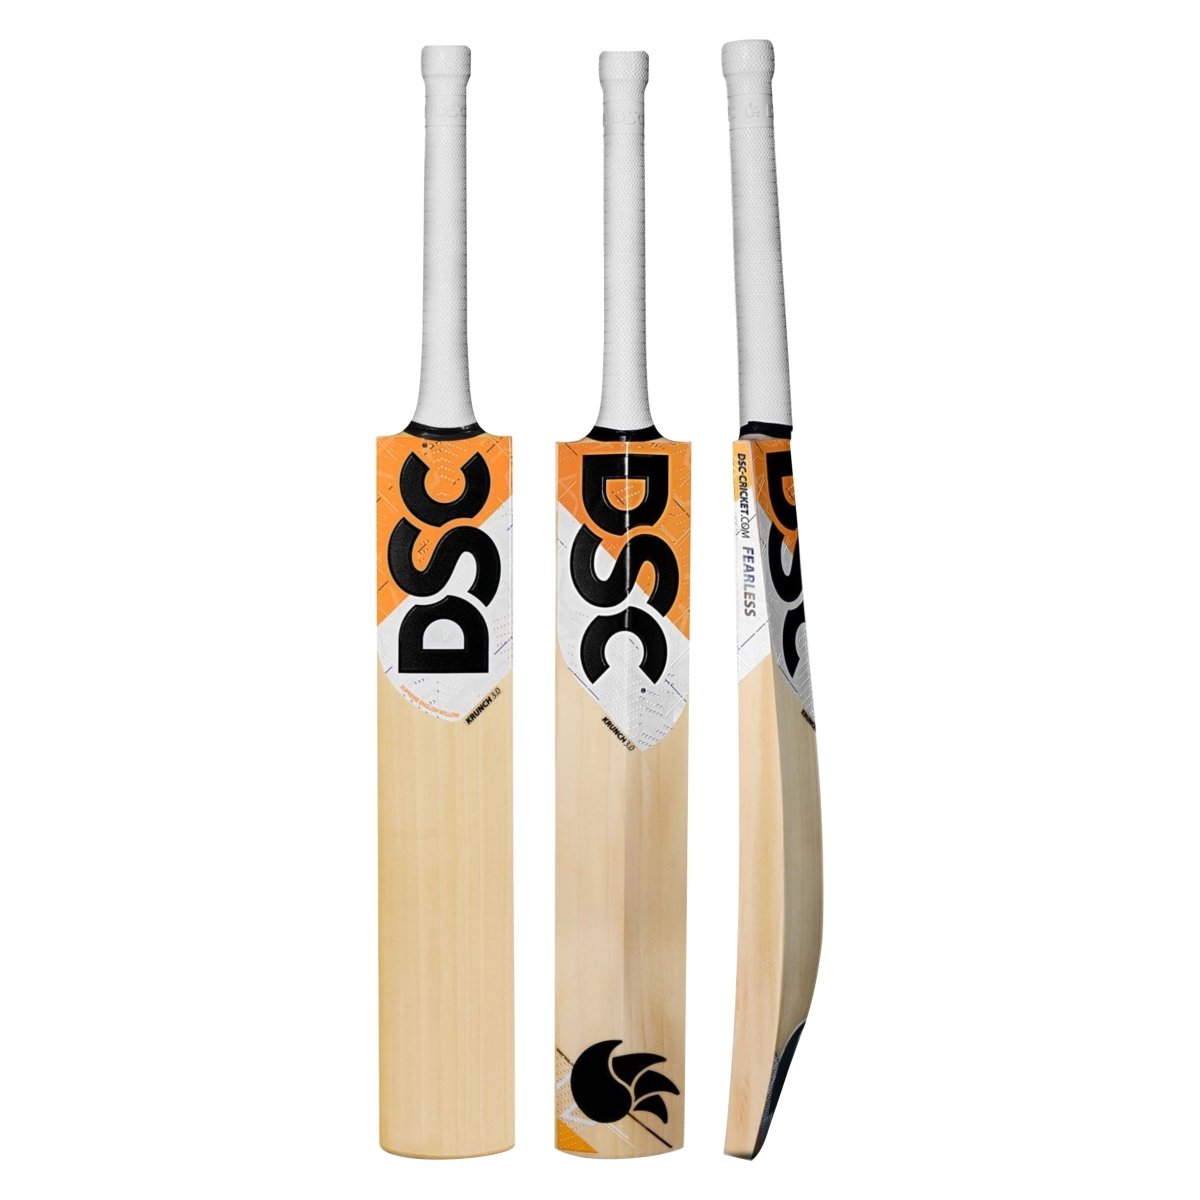 DSC Krunch 3.0 English Willow Cricket Bat - Acrux Sports